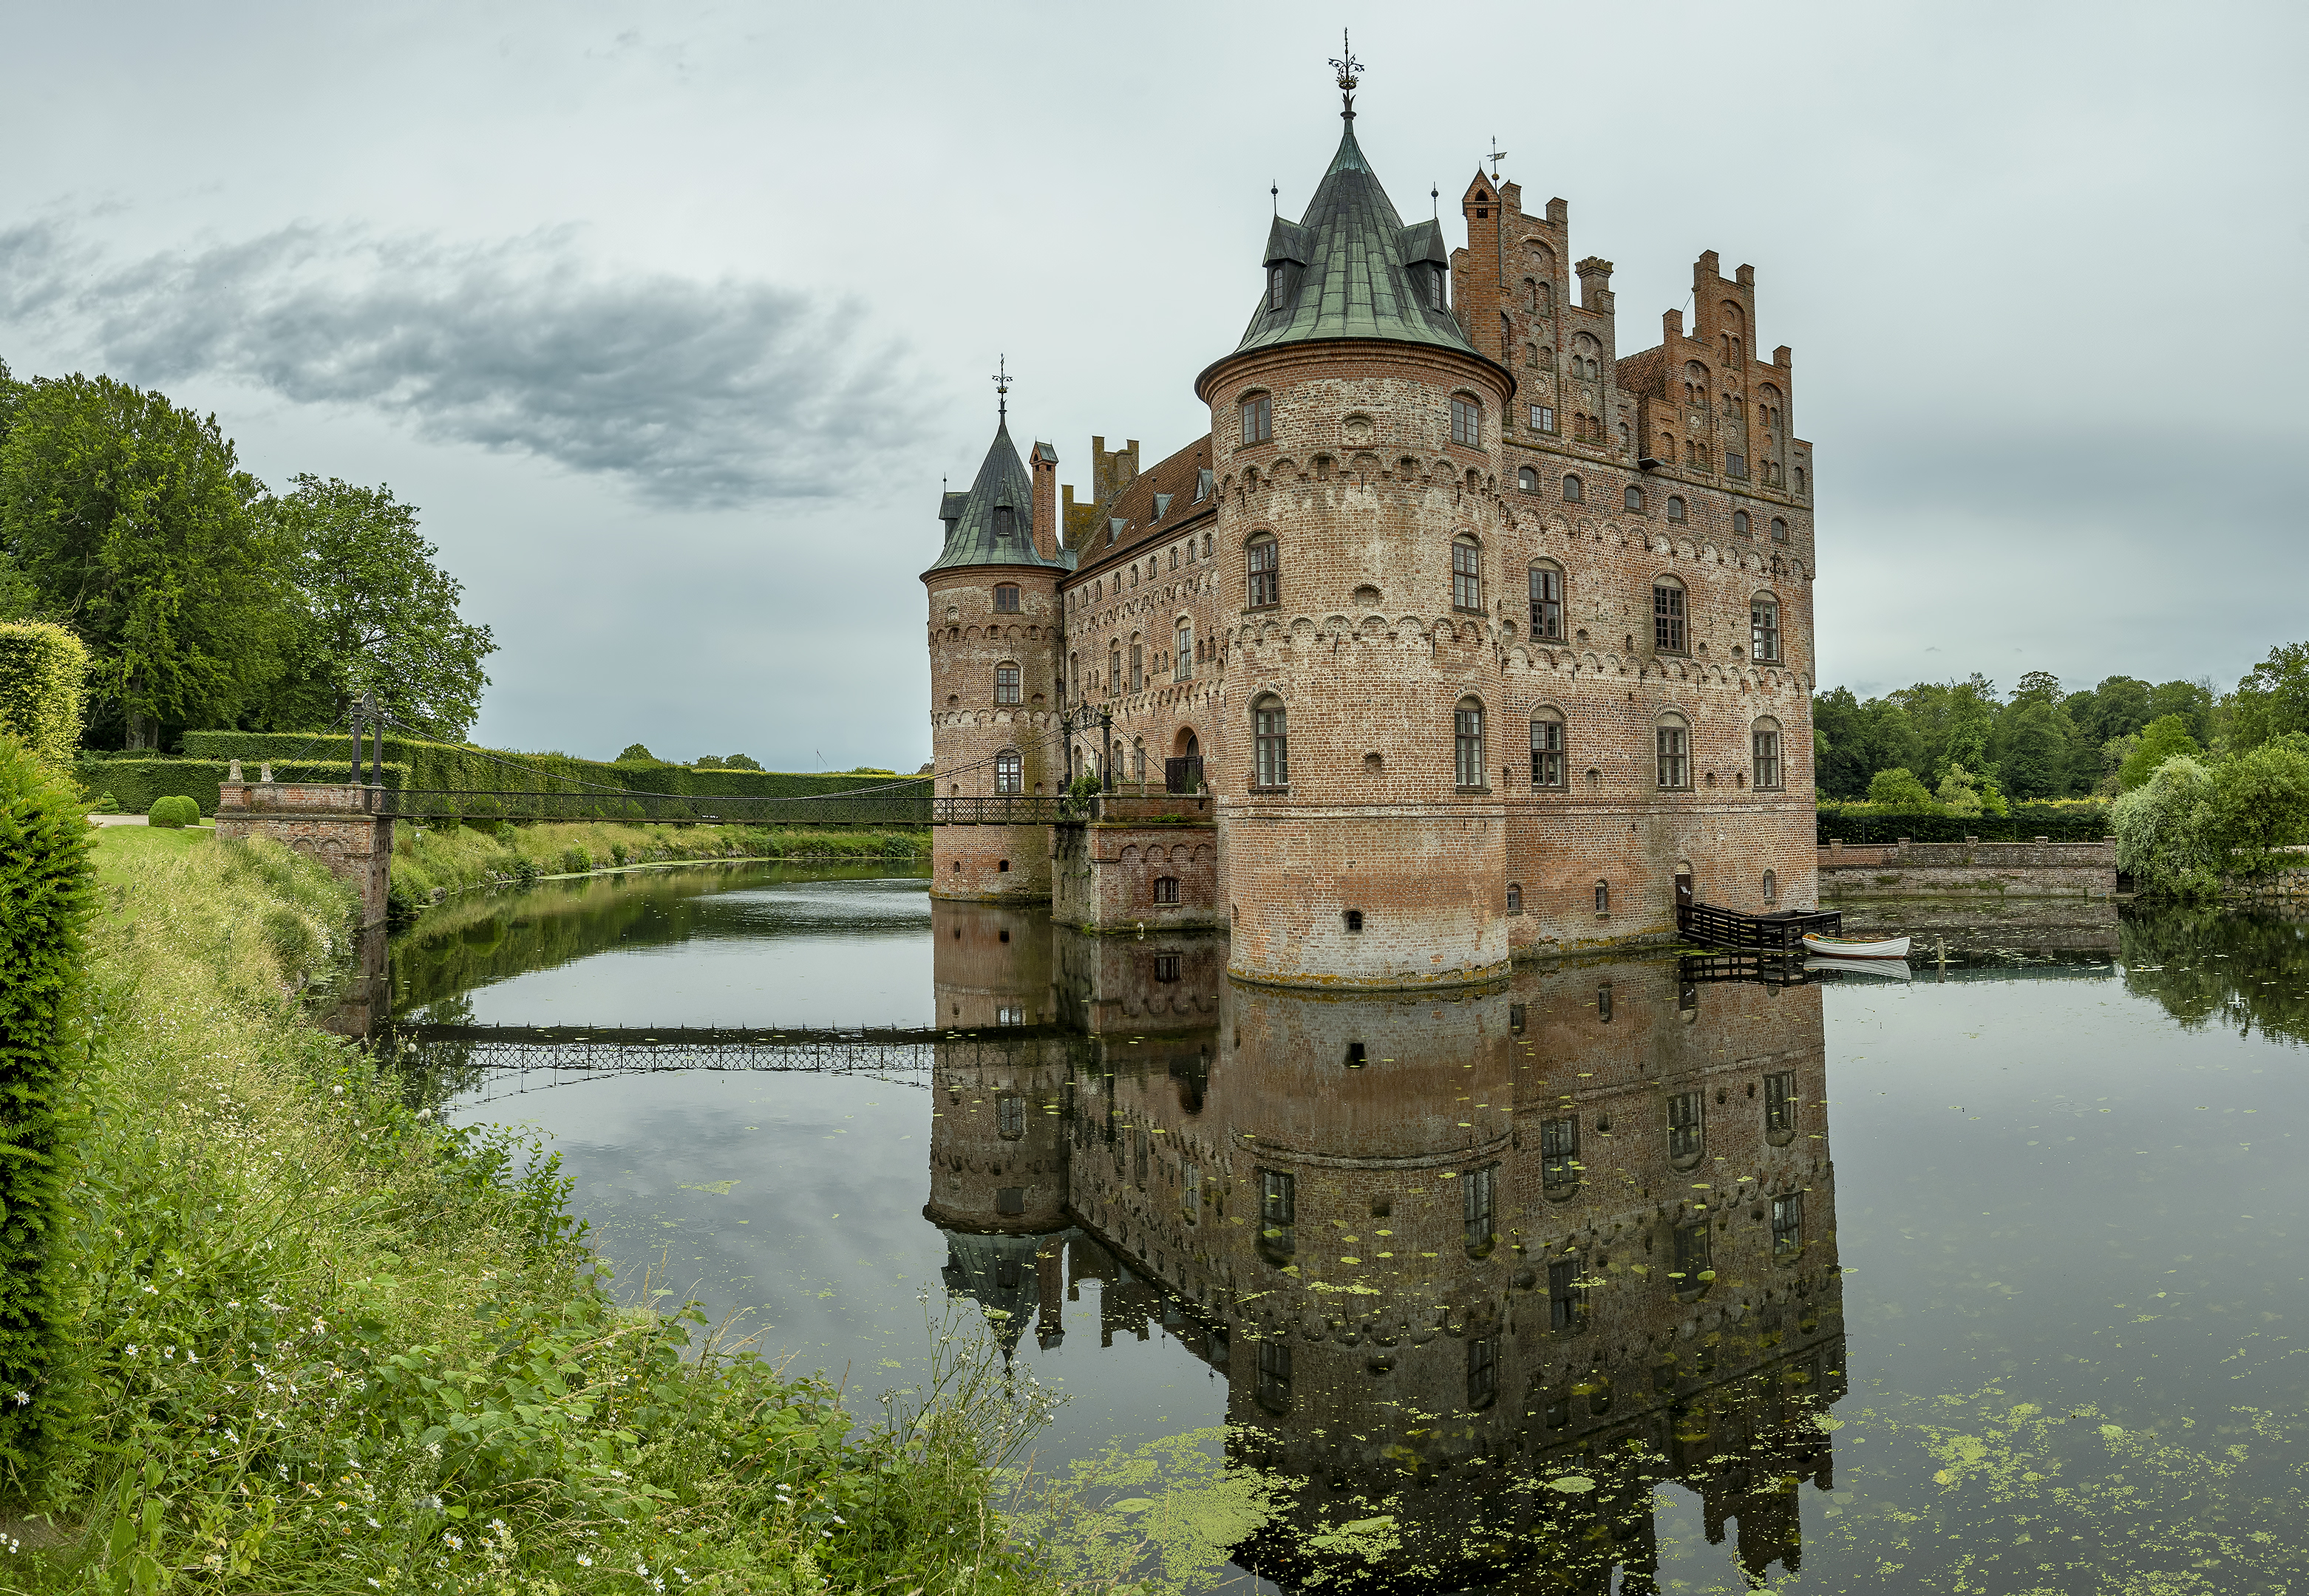 6-photo photomerge denmark castle Egeskov